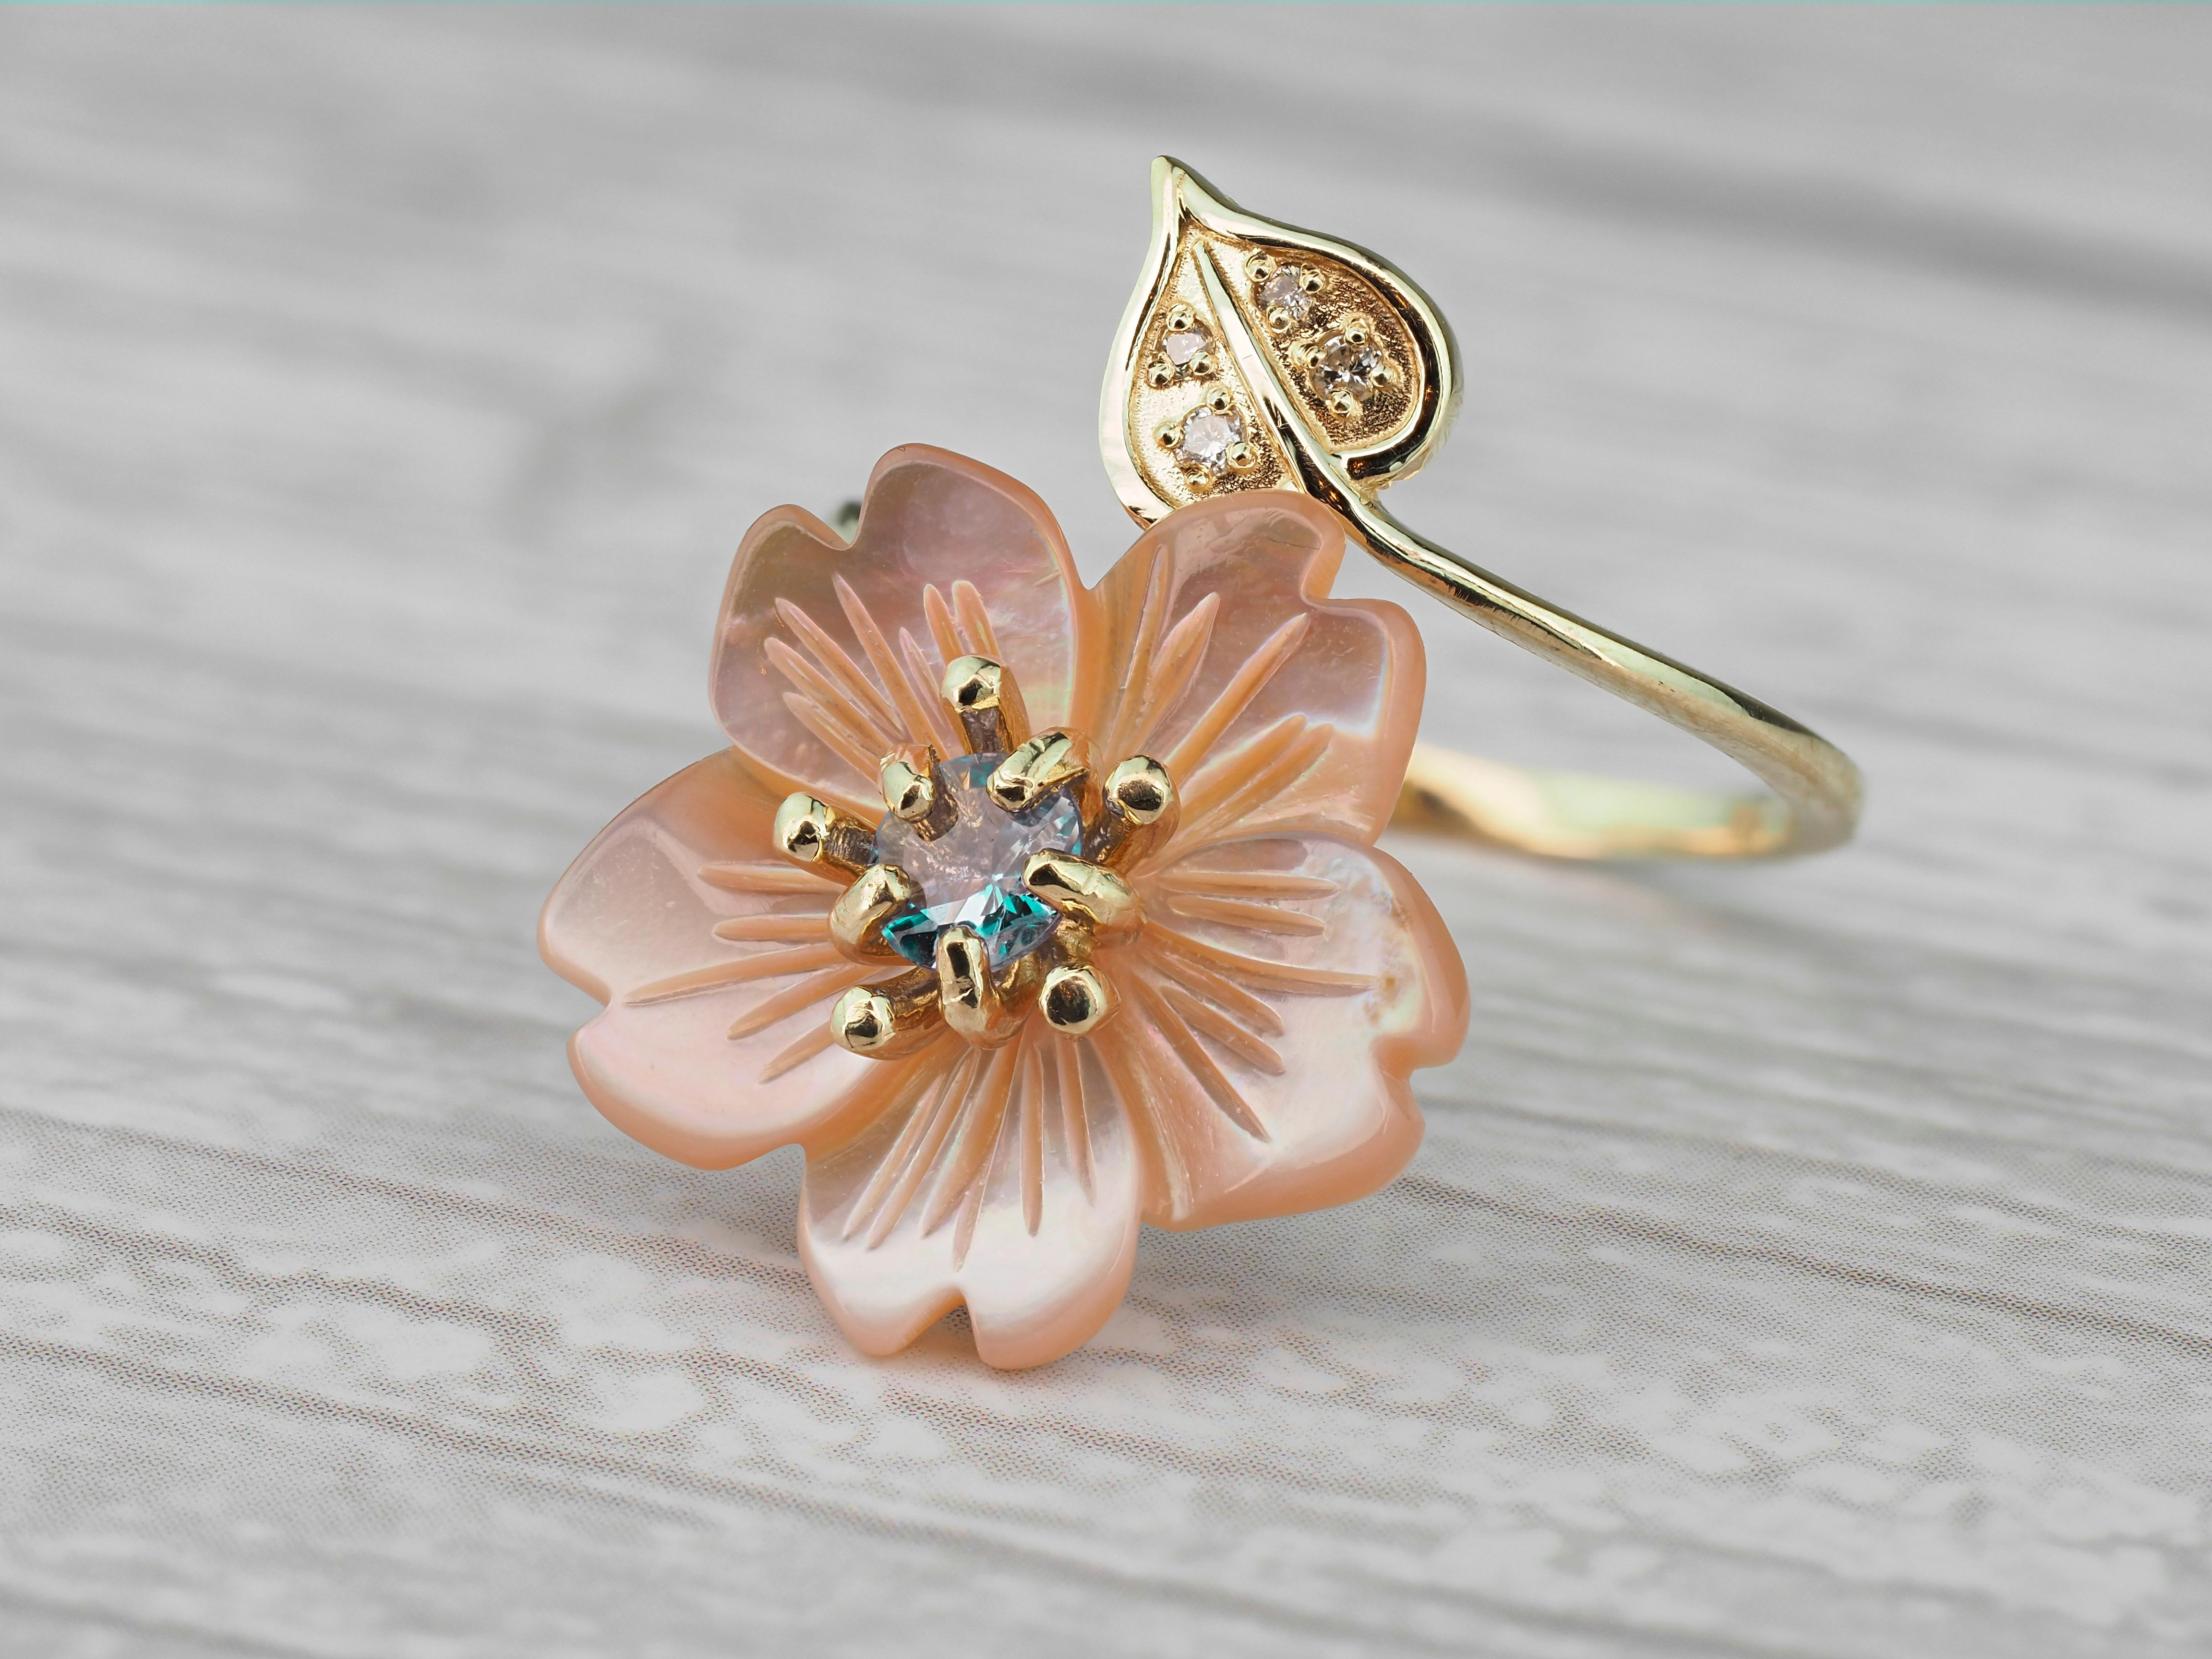 For Sale:  Carved Flower 14k ring with gemstones.  7